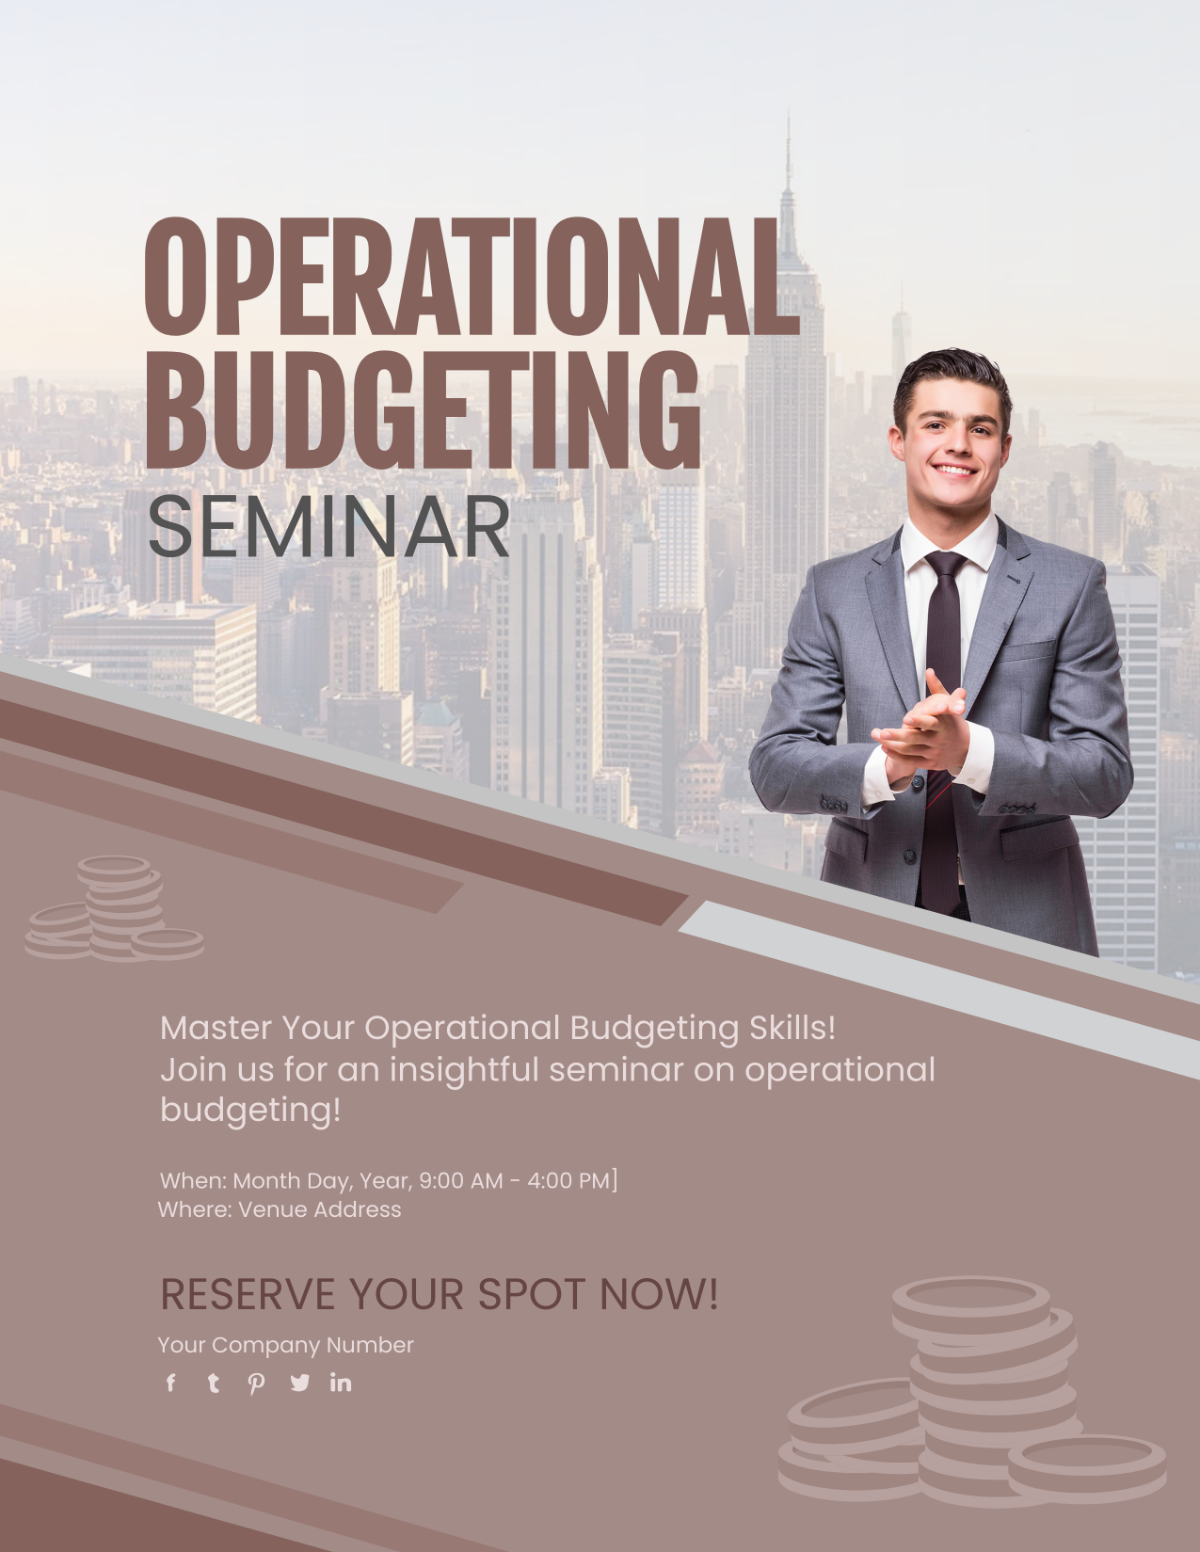 Operational Budgeting Seminar Flyer Template